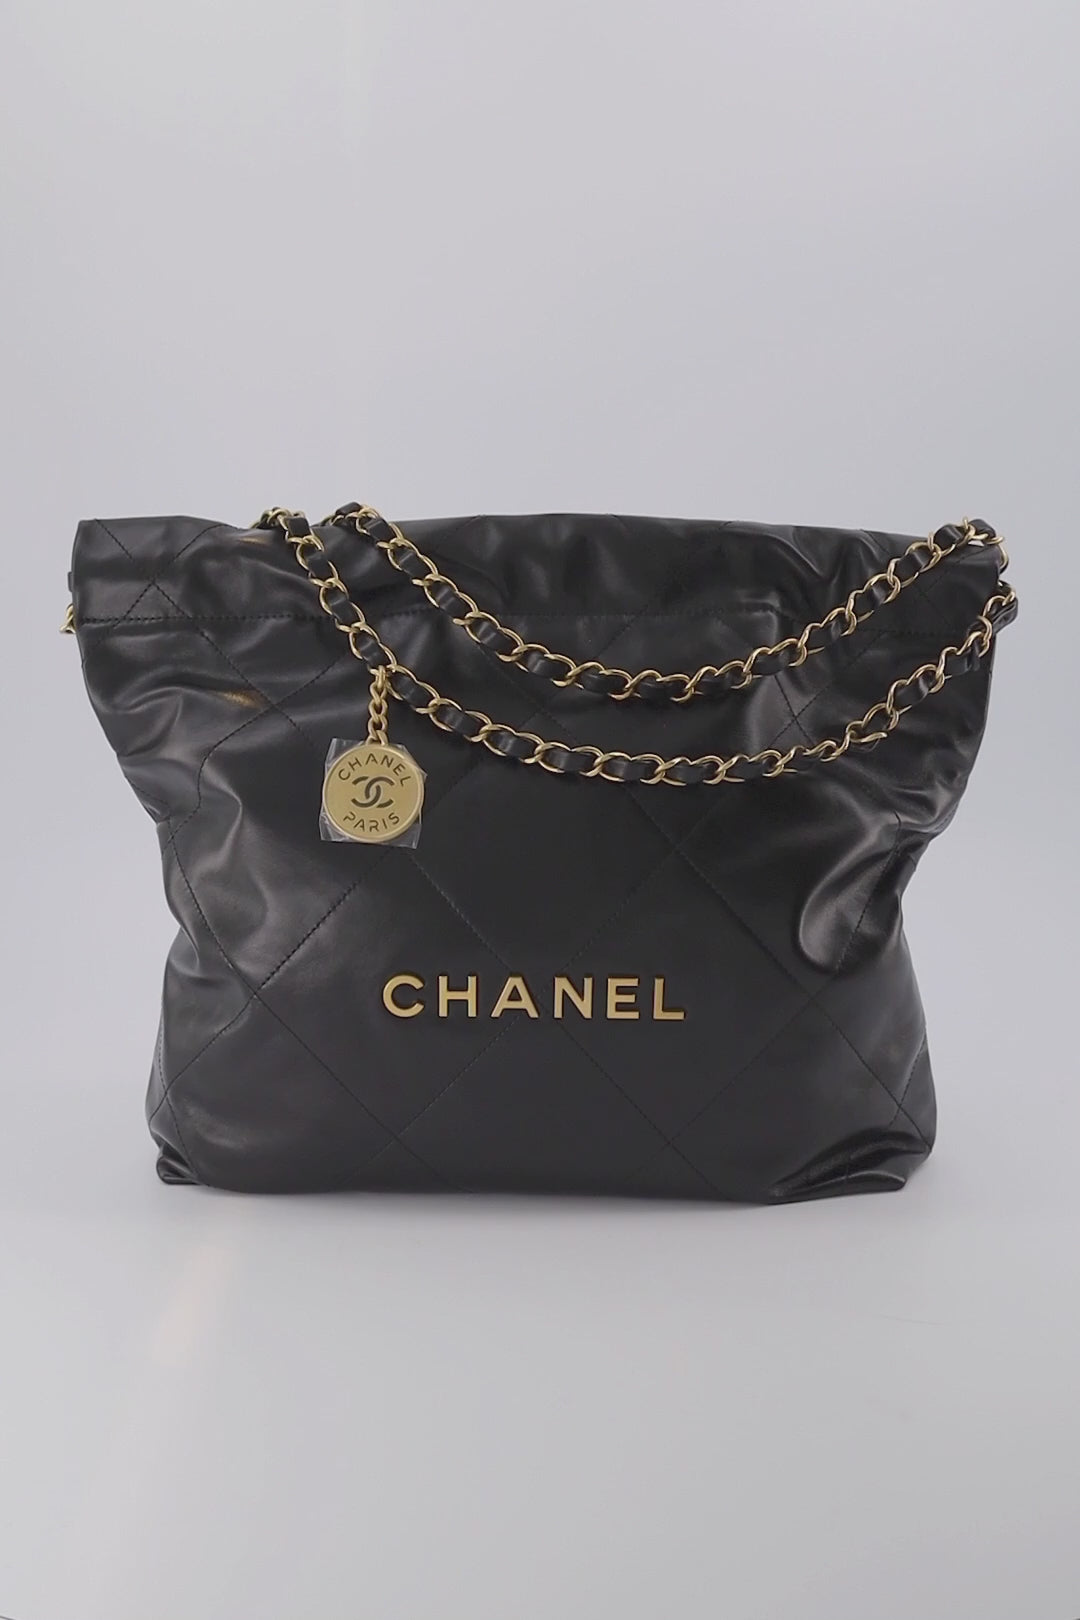 chanel chain bag small black